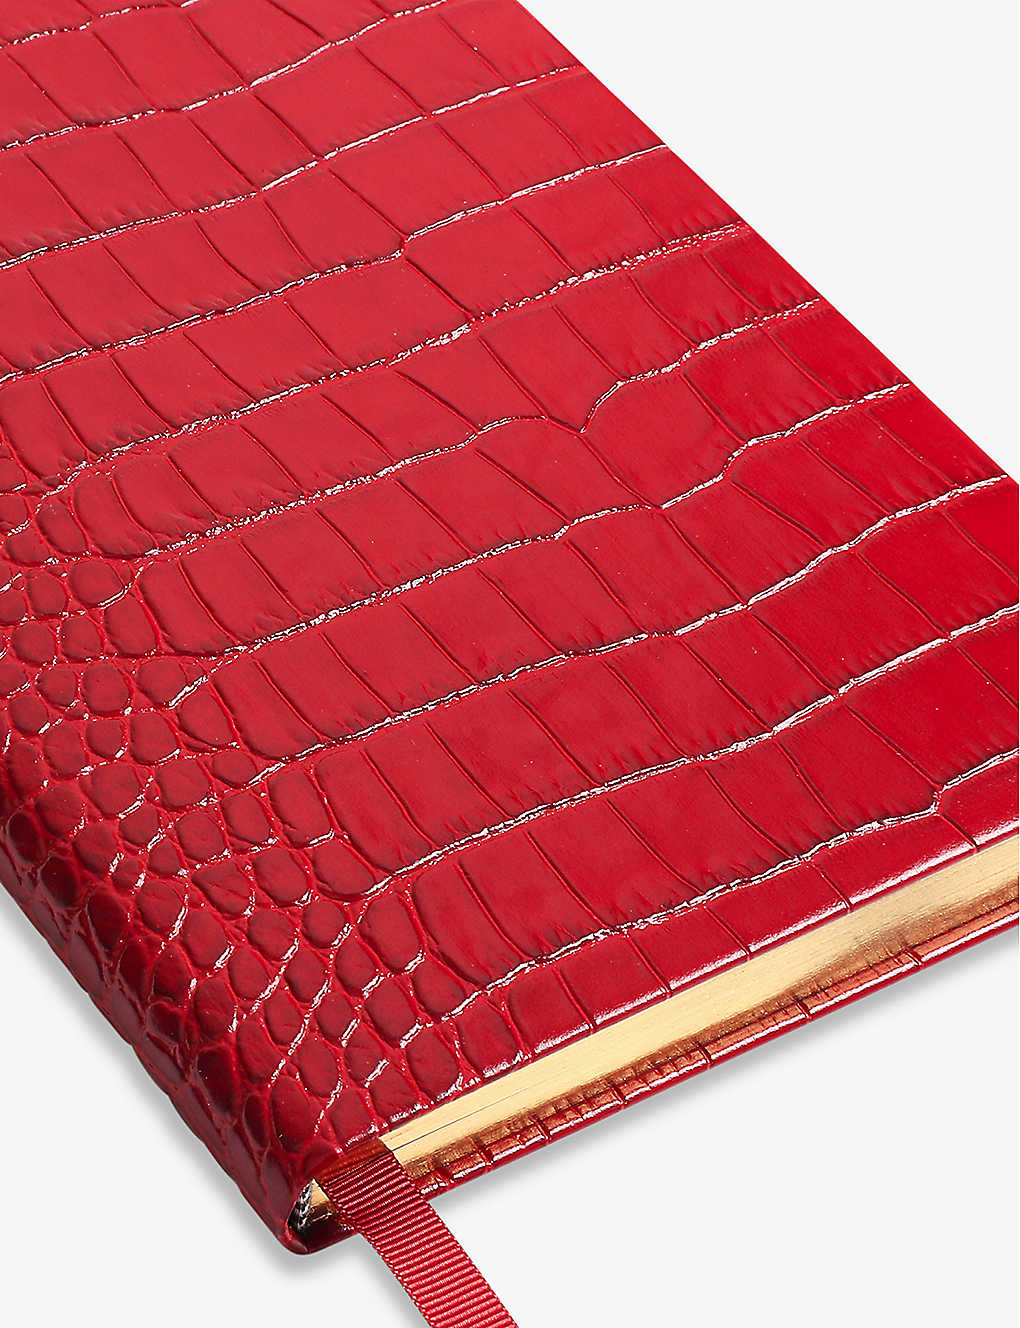 SMYTHSON ソーホー マーラ クロックエンボス レザーノート 19×14cm Soho Mara Croc-embossed Leather  Notebook 19cm X 14cm RED 手帳・ノート・紙製品